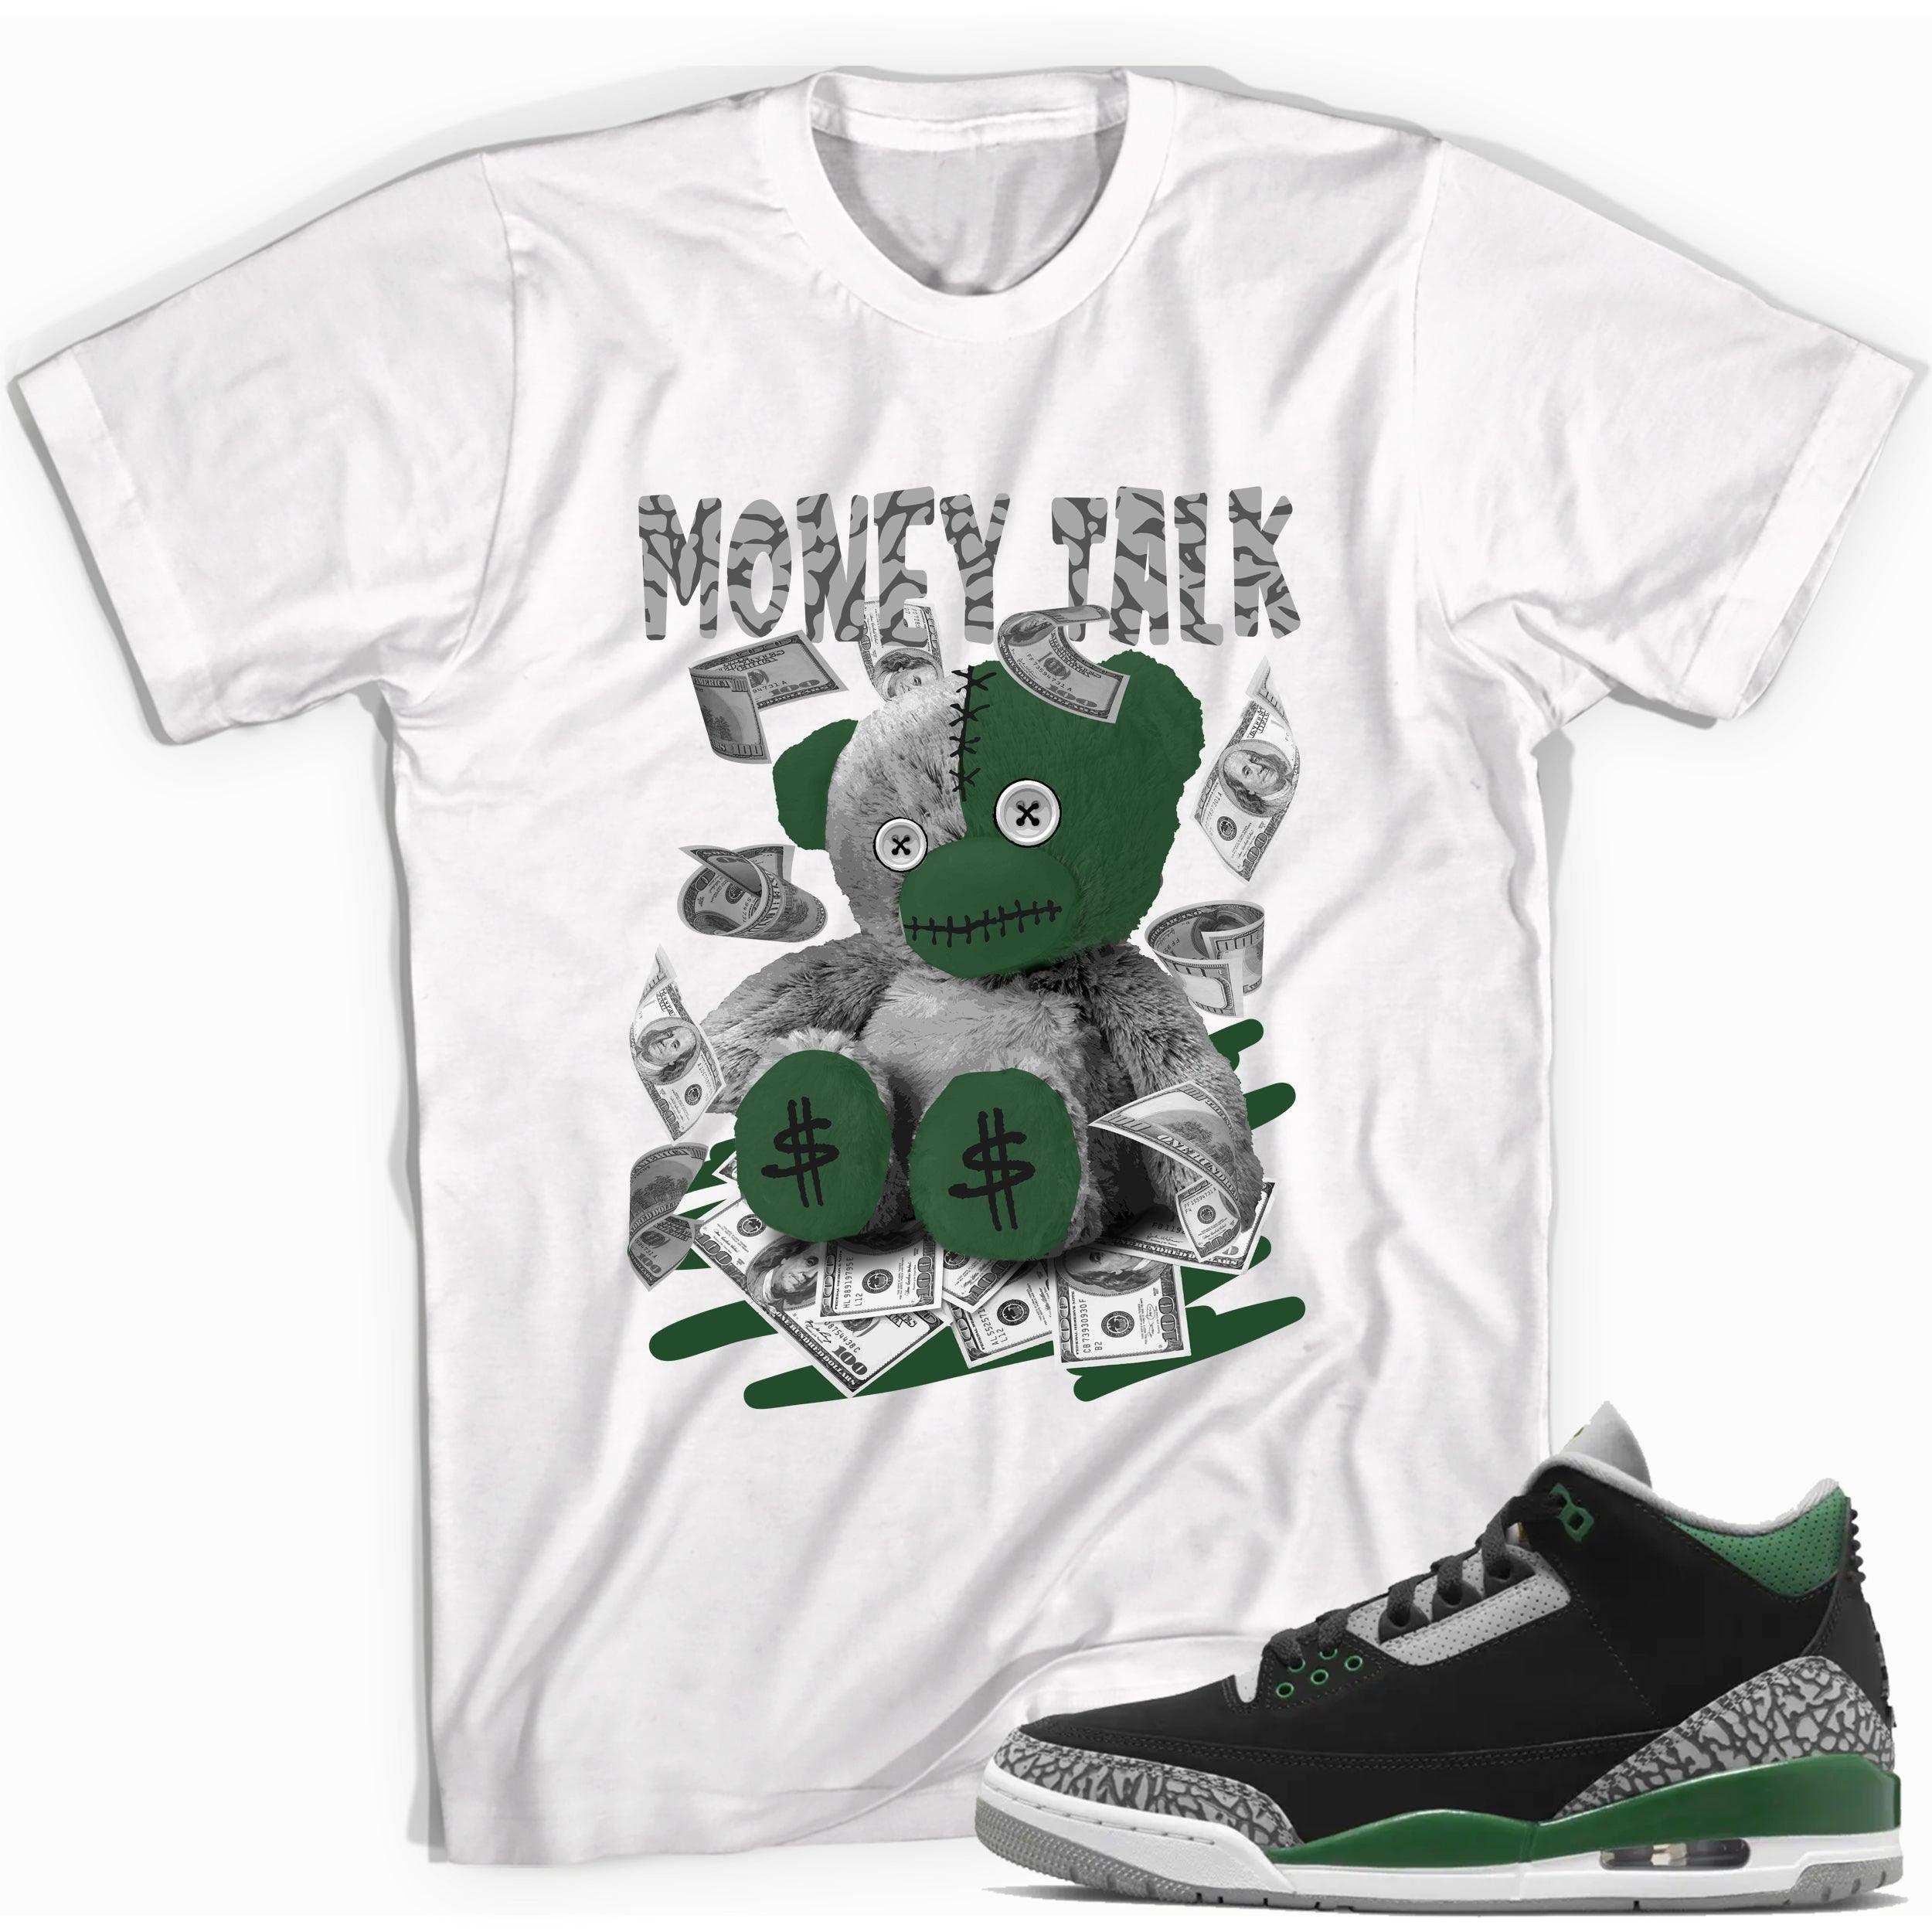 Money Talk Shirt AJ 3 Pine Green photo